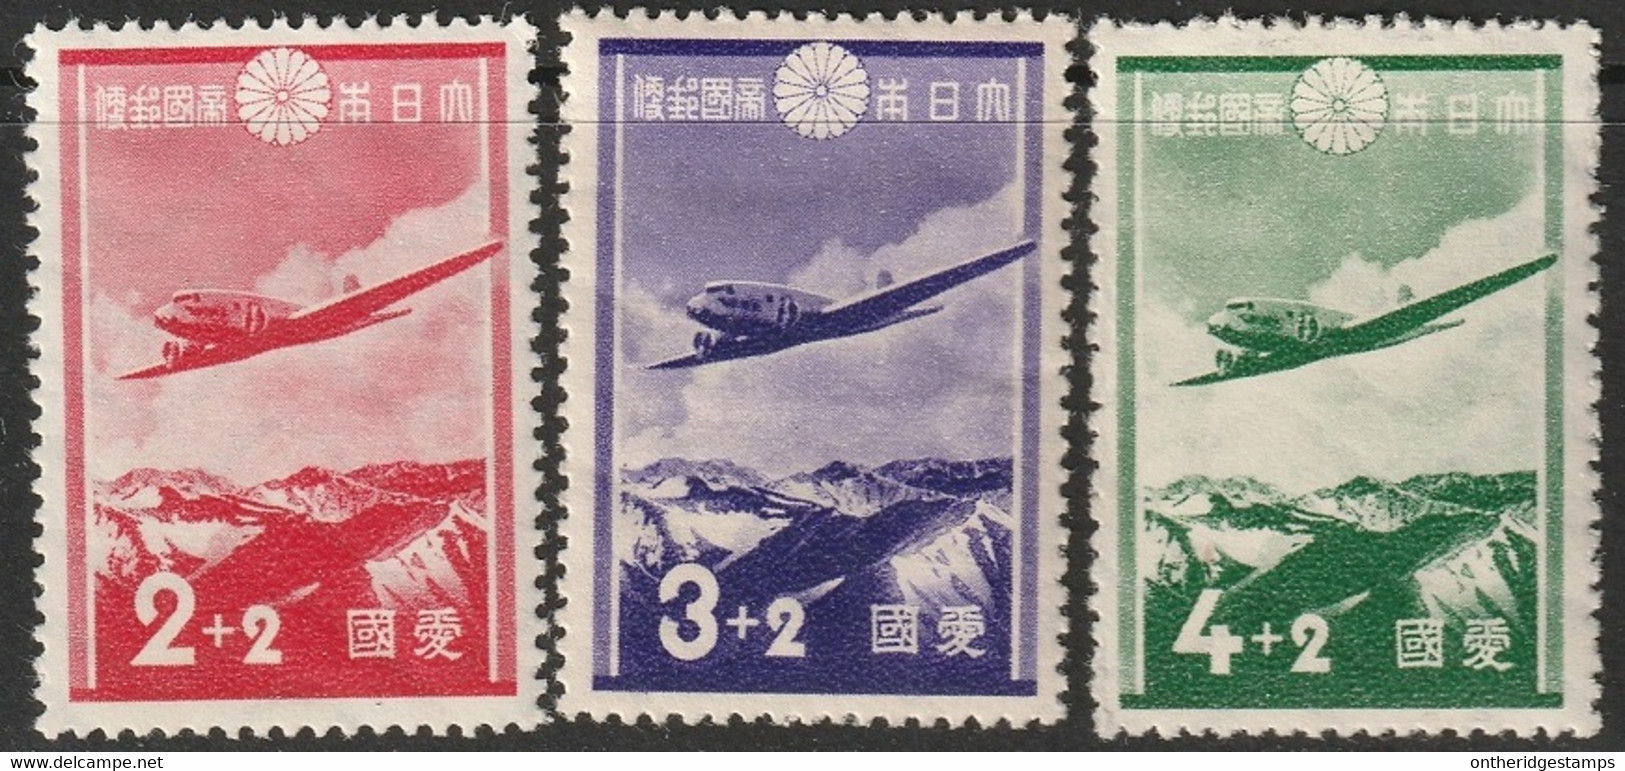 Japan 1937 Sc B1-3 Japon Yt 243-5 Set MH* - Ongebruikt